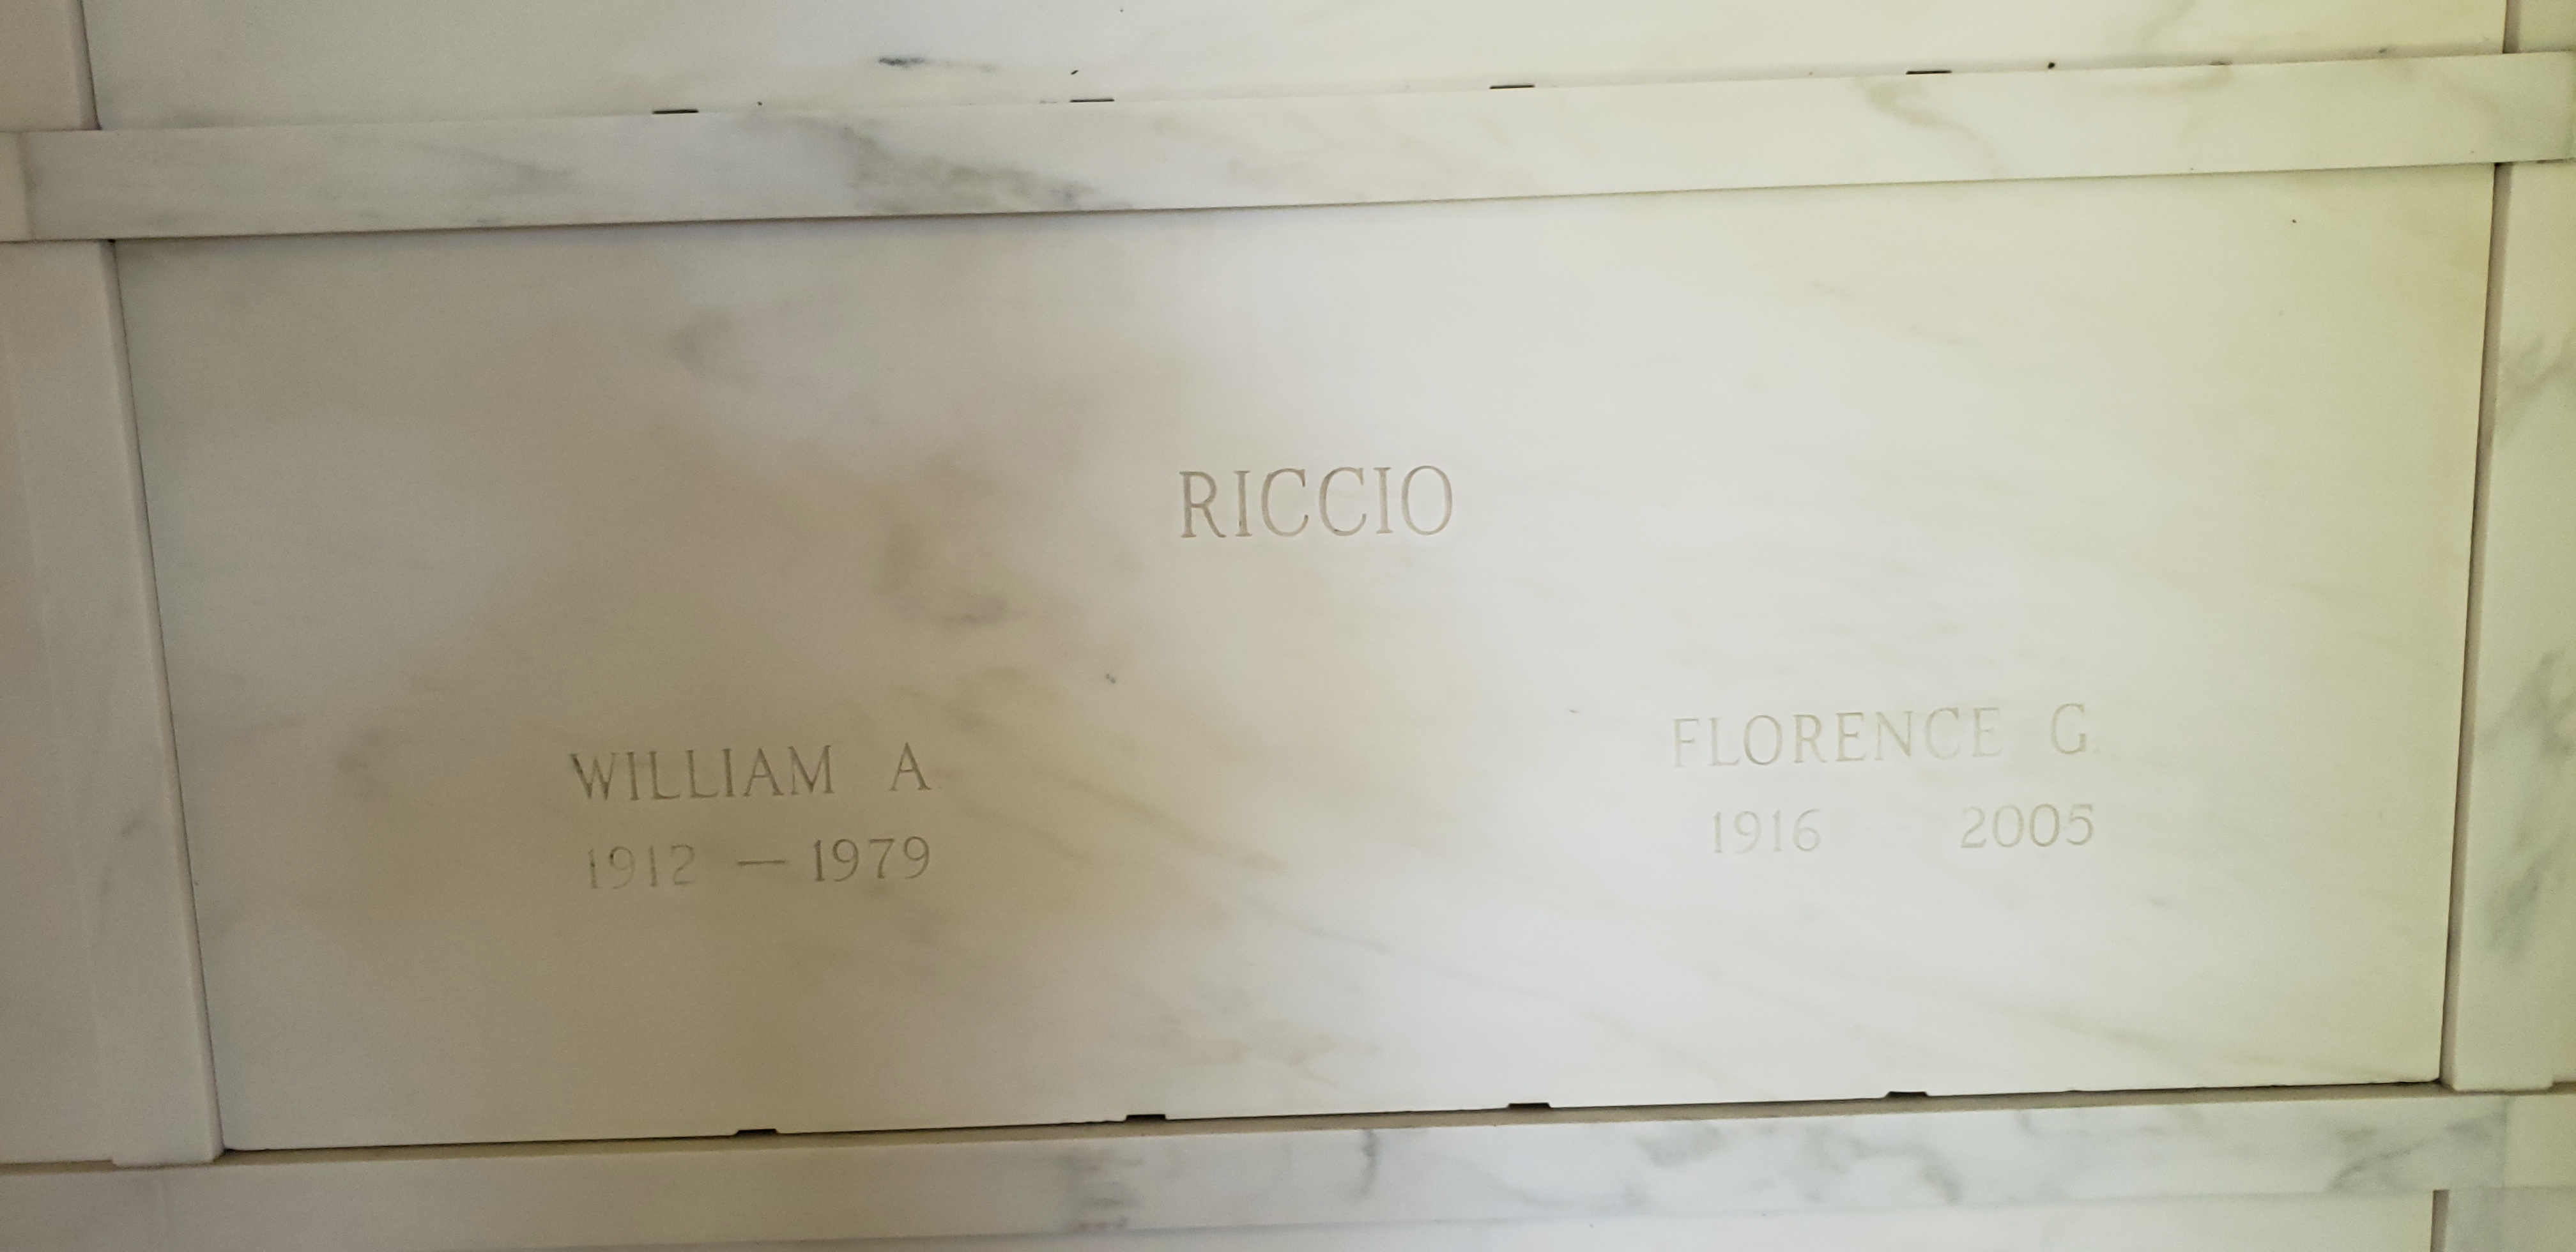 Florence G Riccio